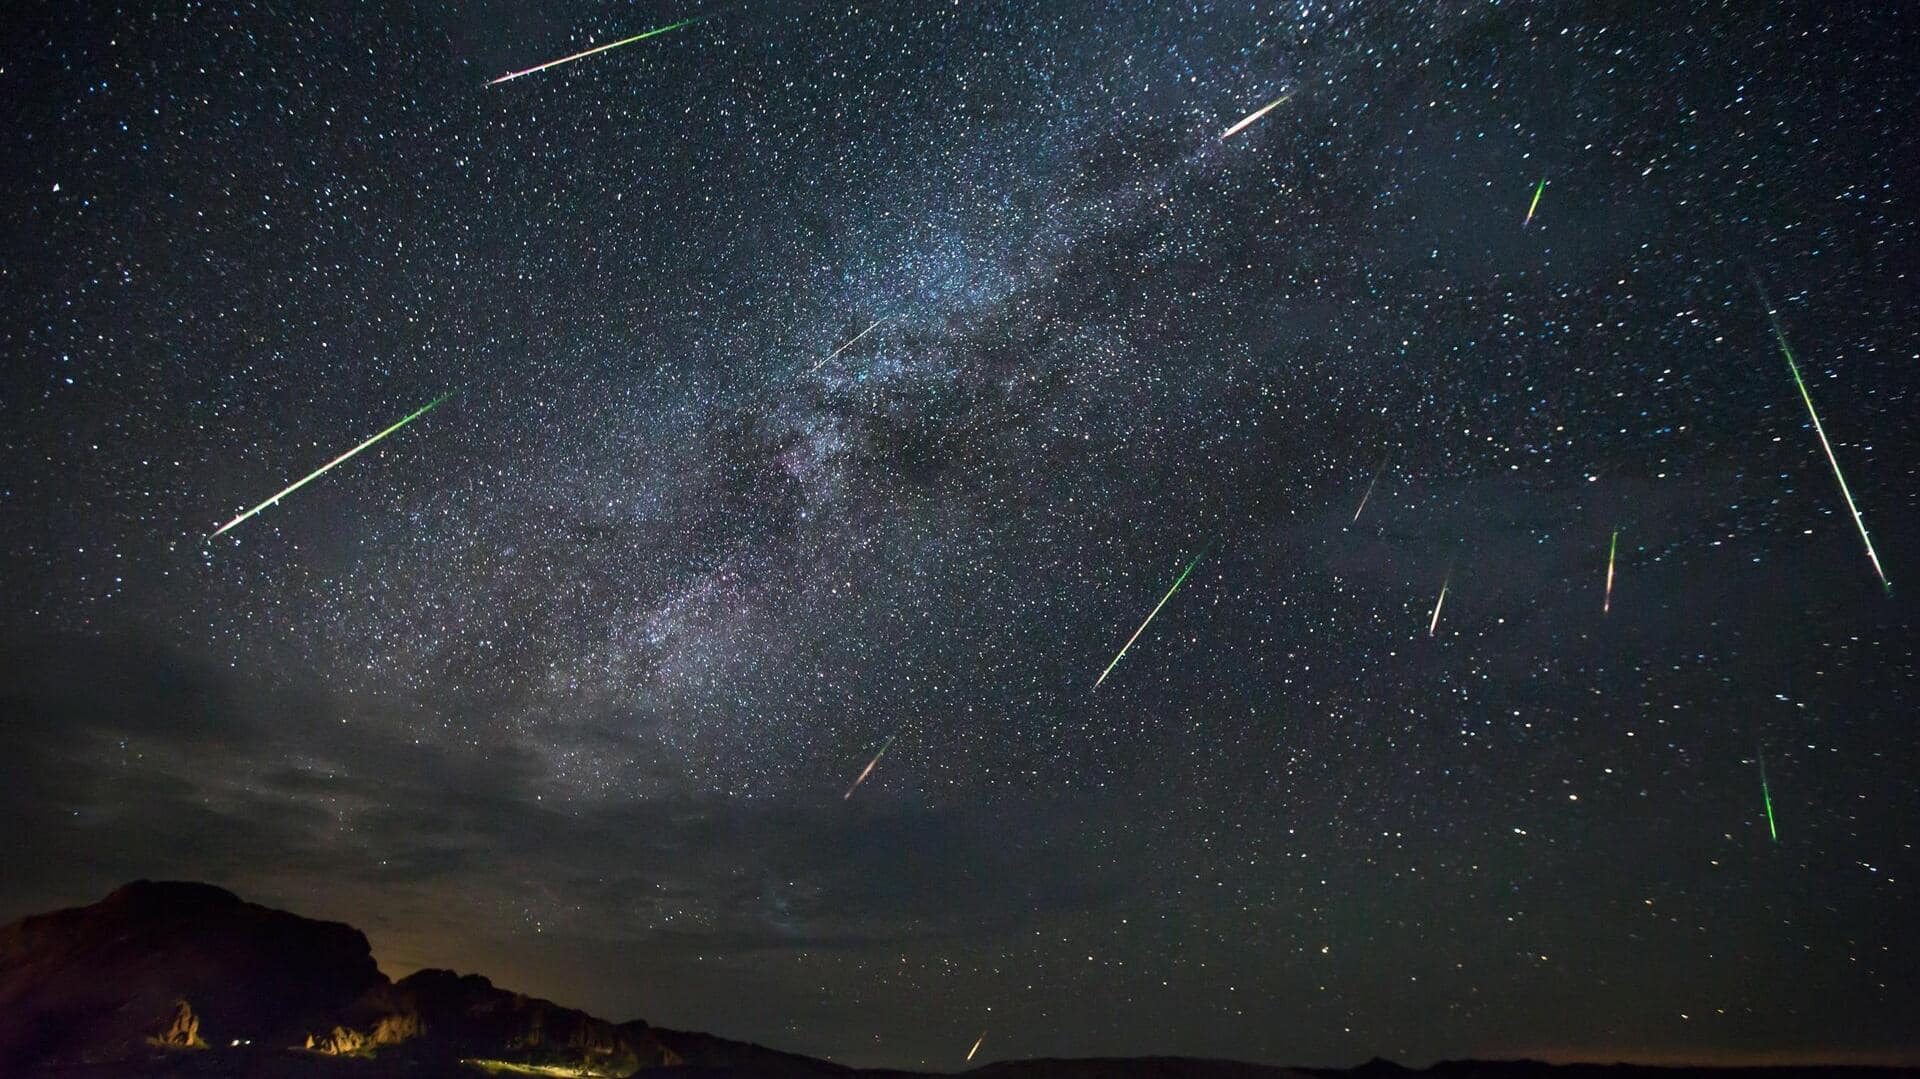 Geminid meteor shower peaks tonight: How to watch